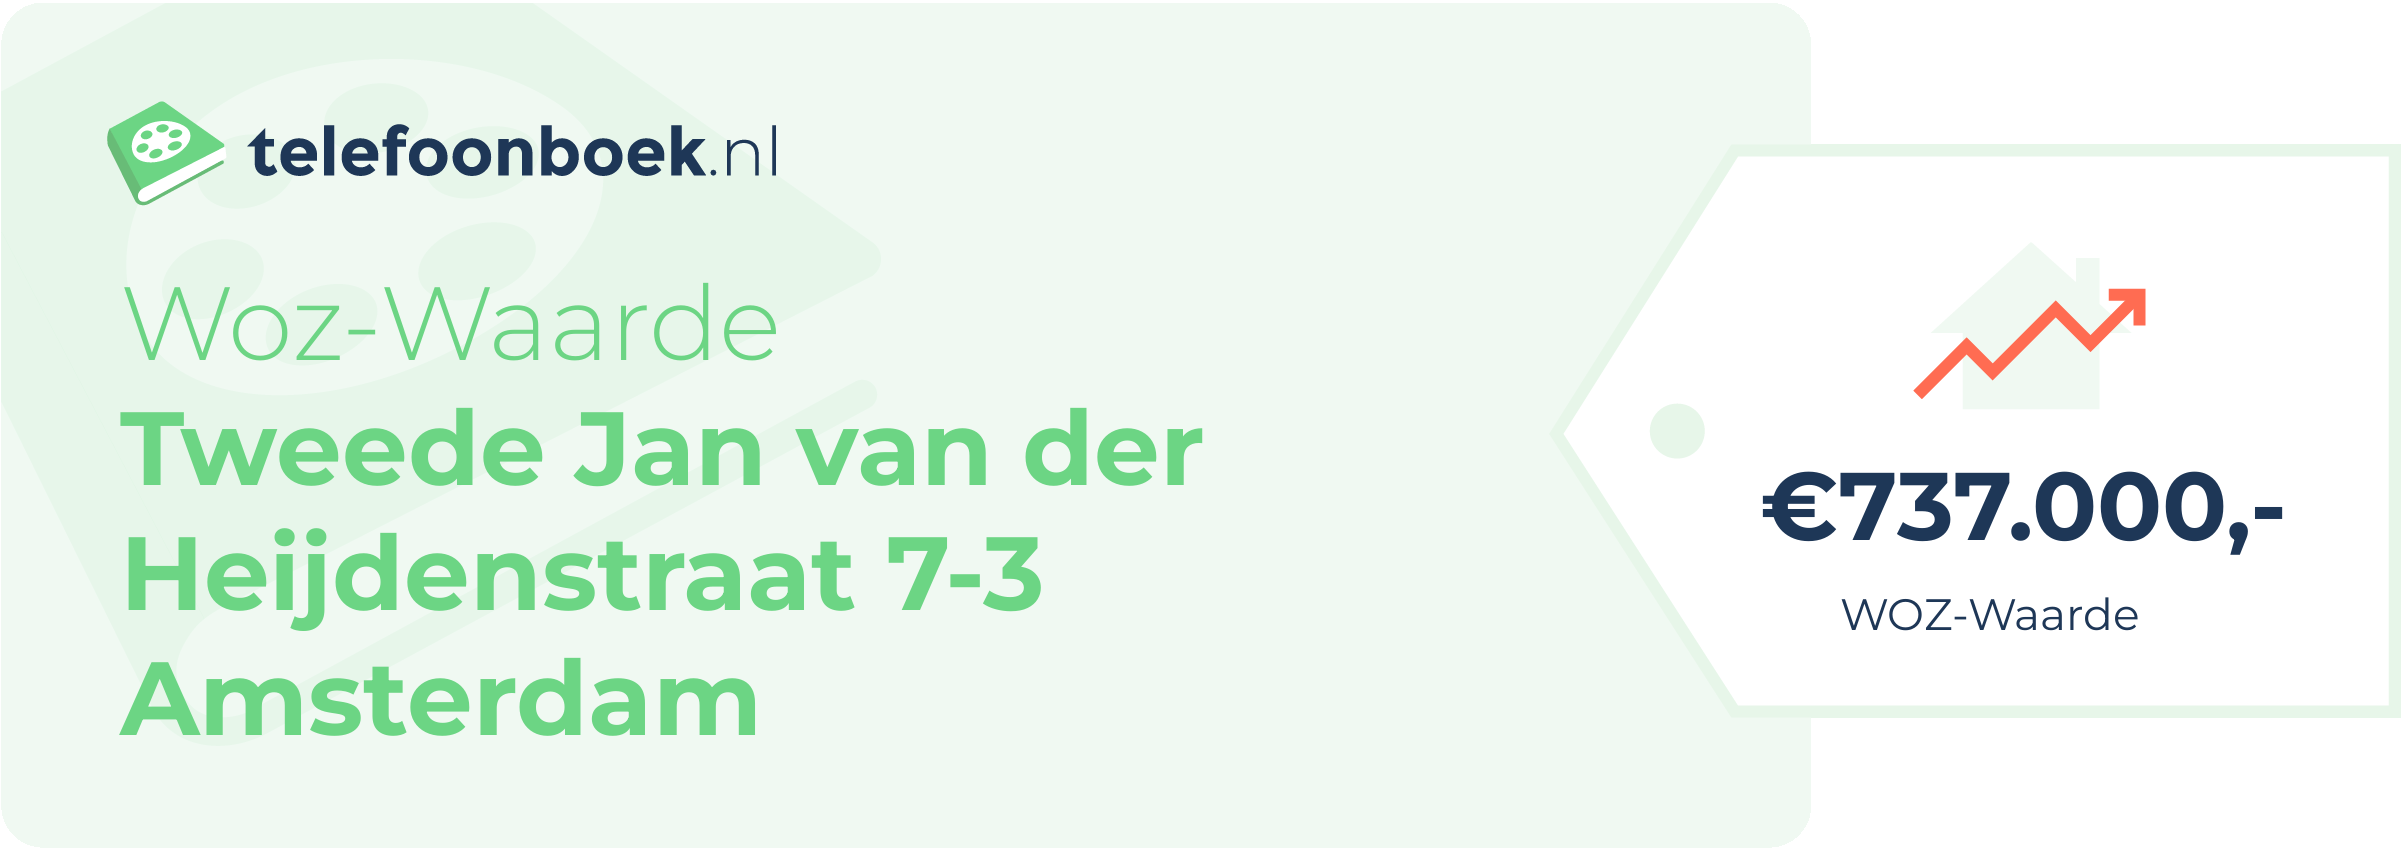 WOZ-waarde Tweede Jan Van Der Heijdenstraat 7-3 Amsterdam